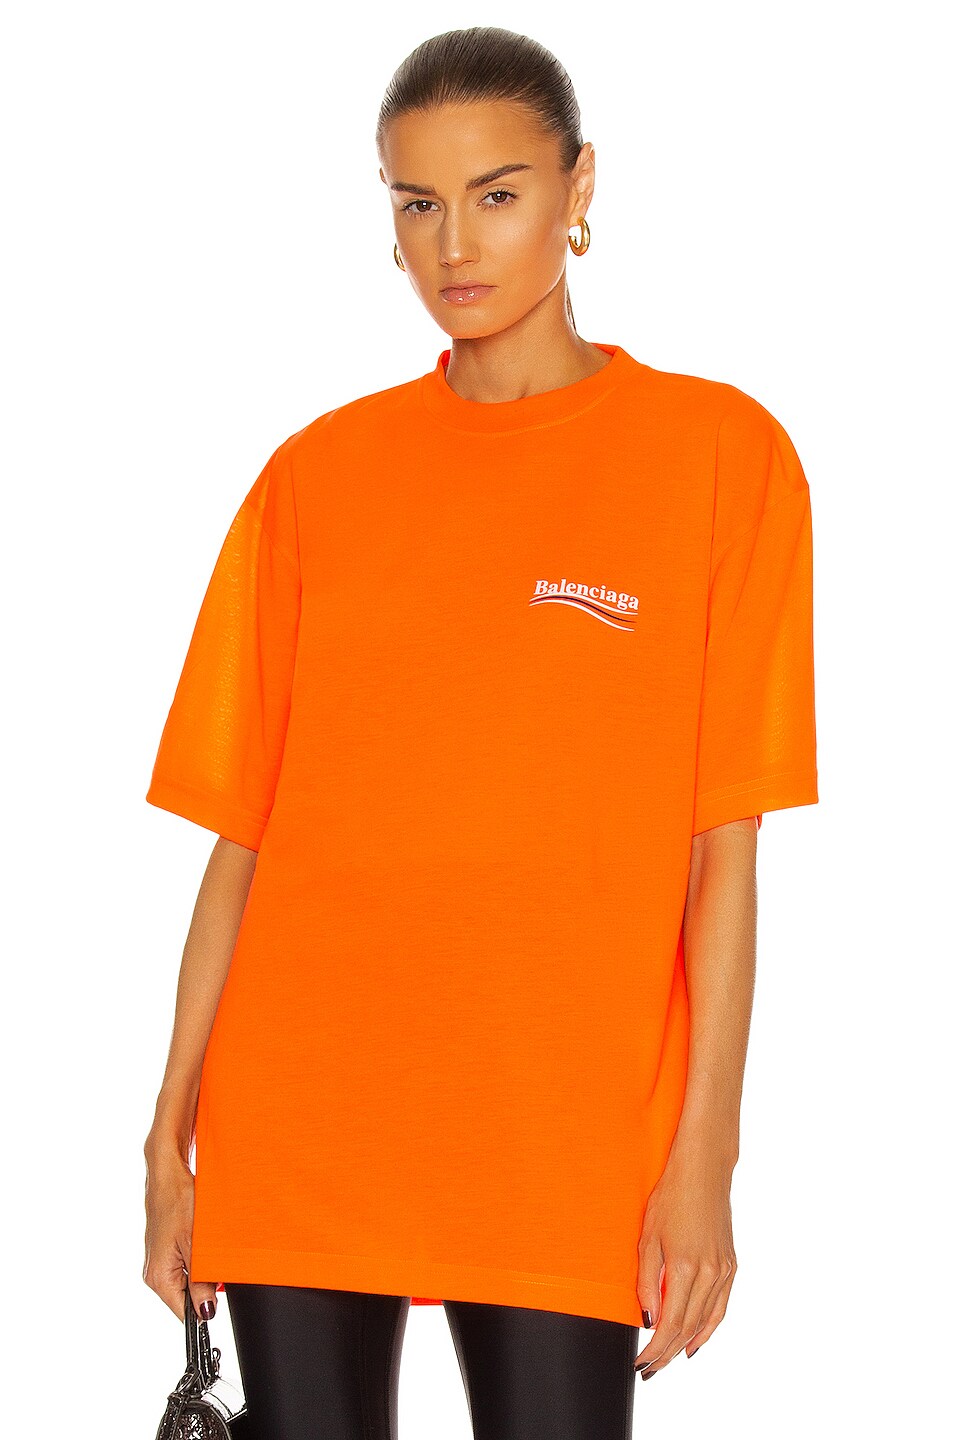 Balenciaga Large Fit T Shirt in Fluo Orange & White | FWRD